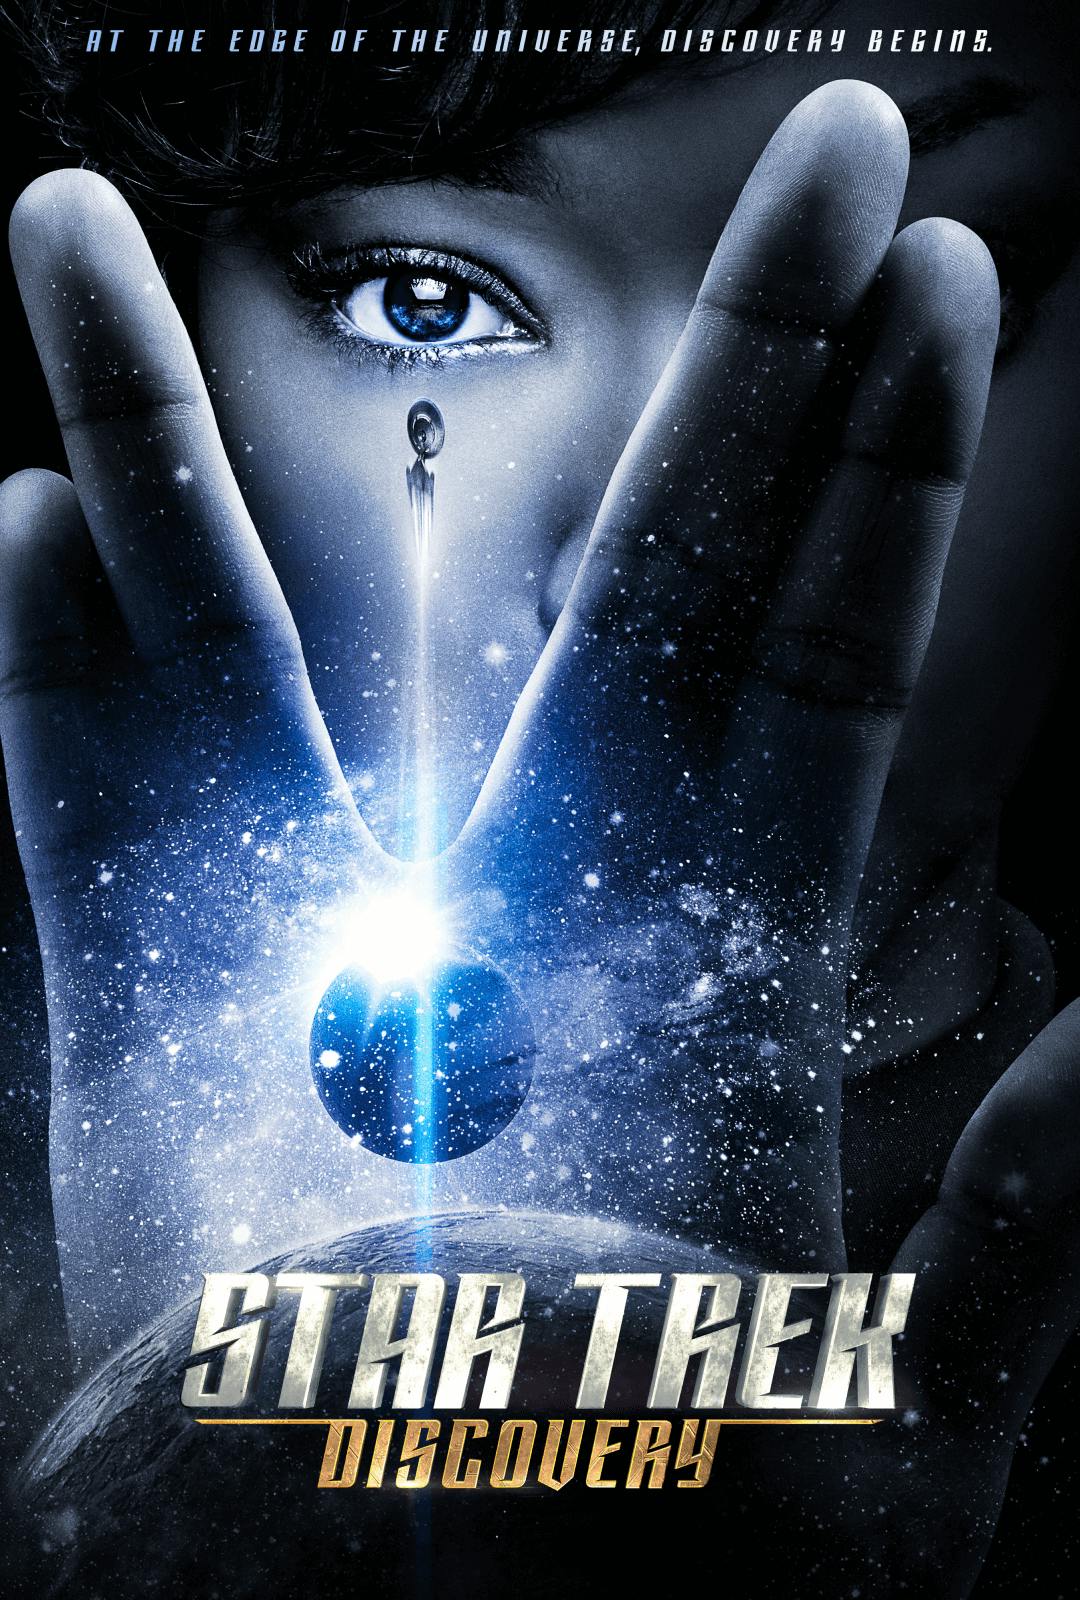 Key art for Star Trek: Discovery Season 1